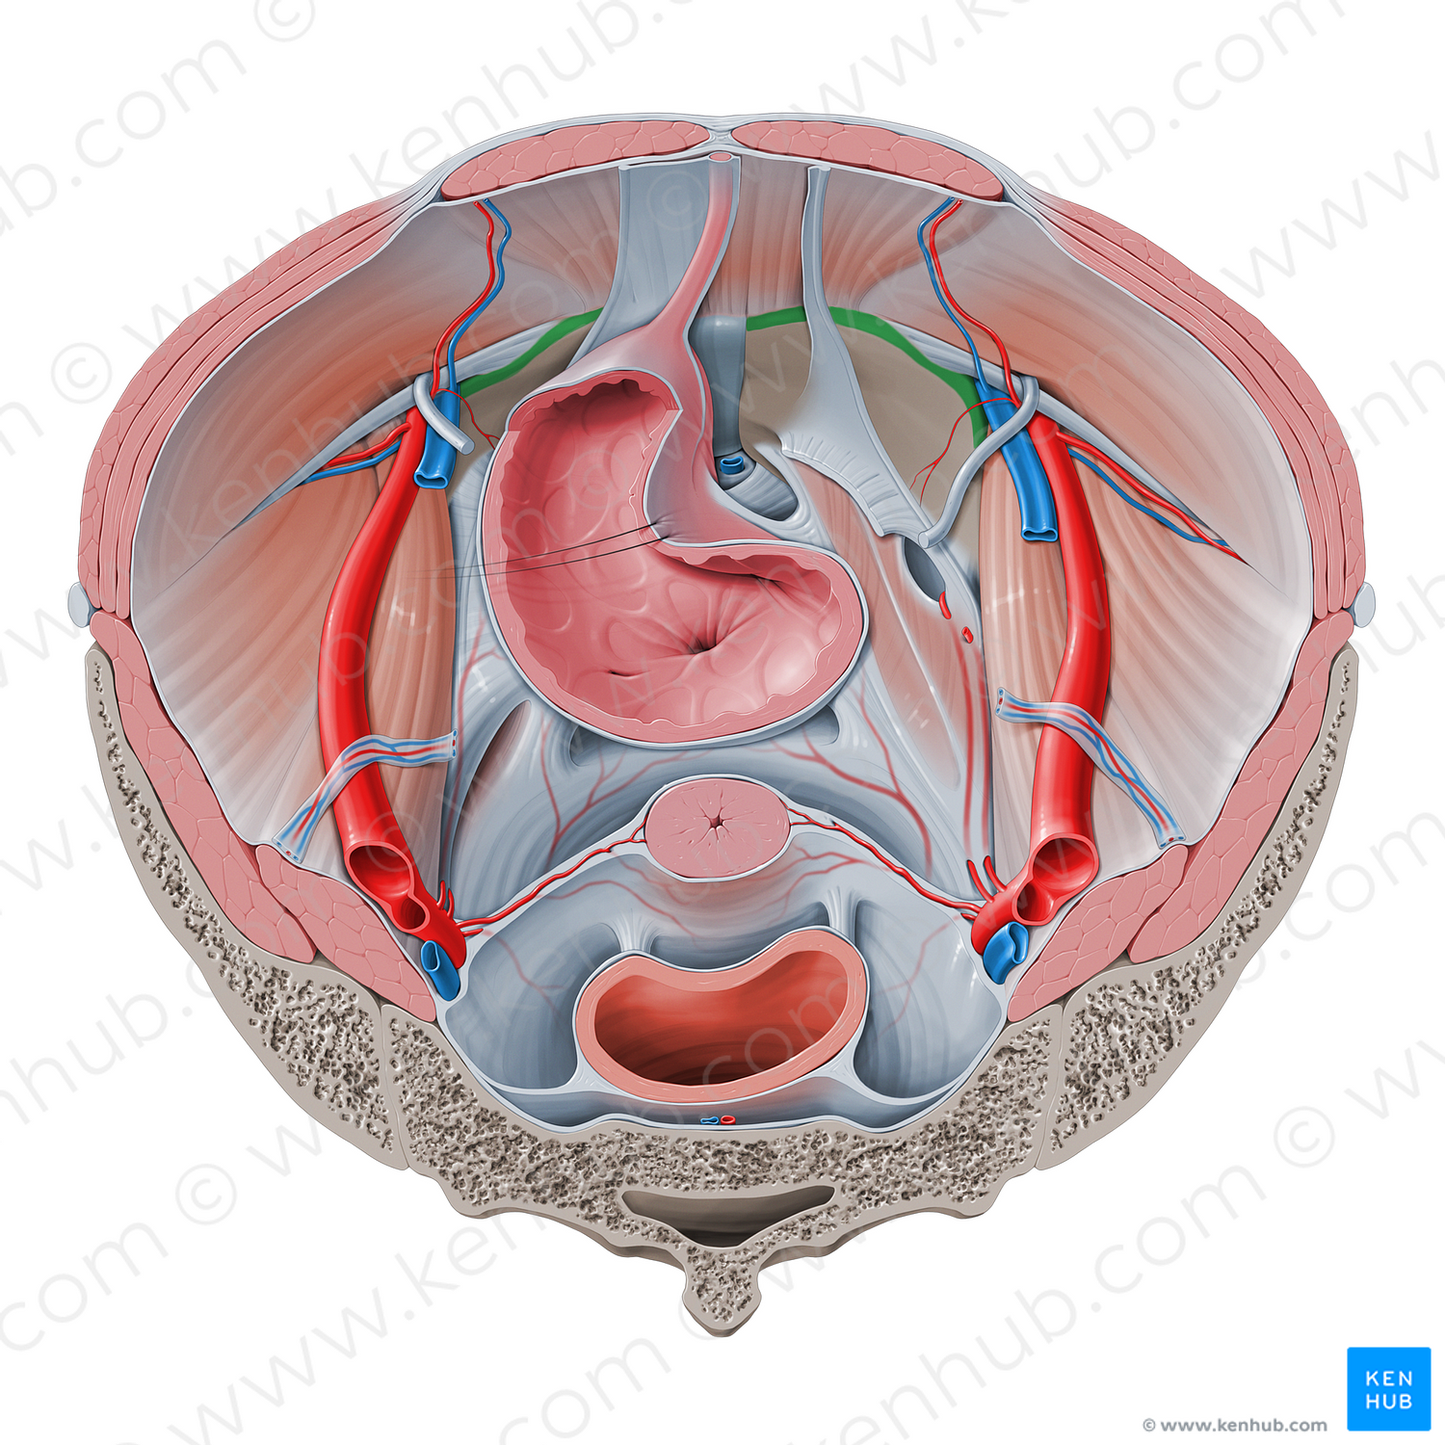 Linea terminalis of pelvis (#4730)